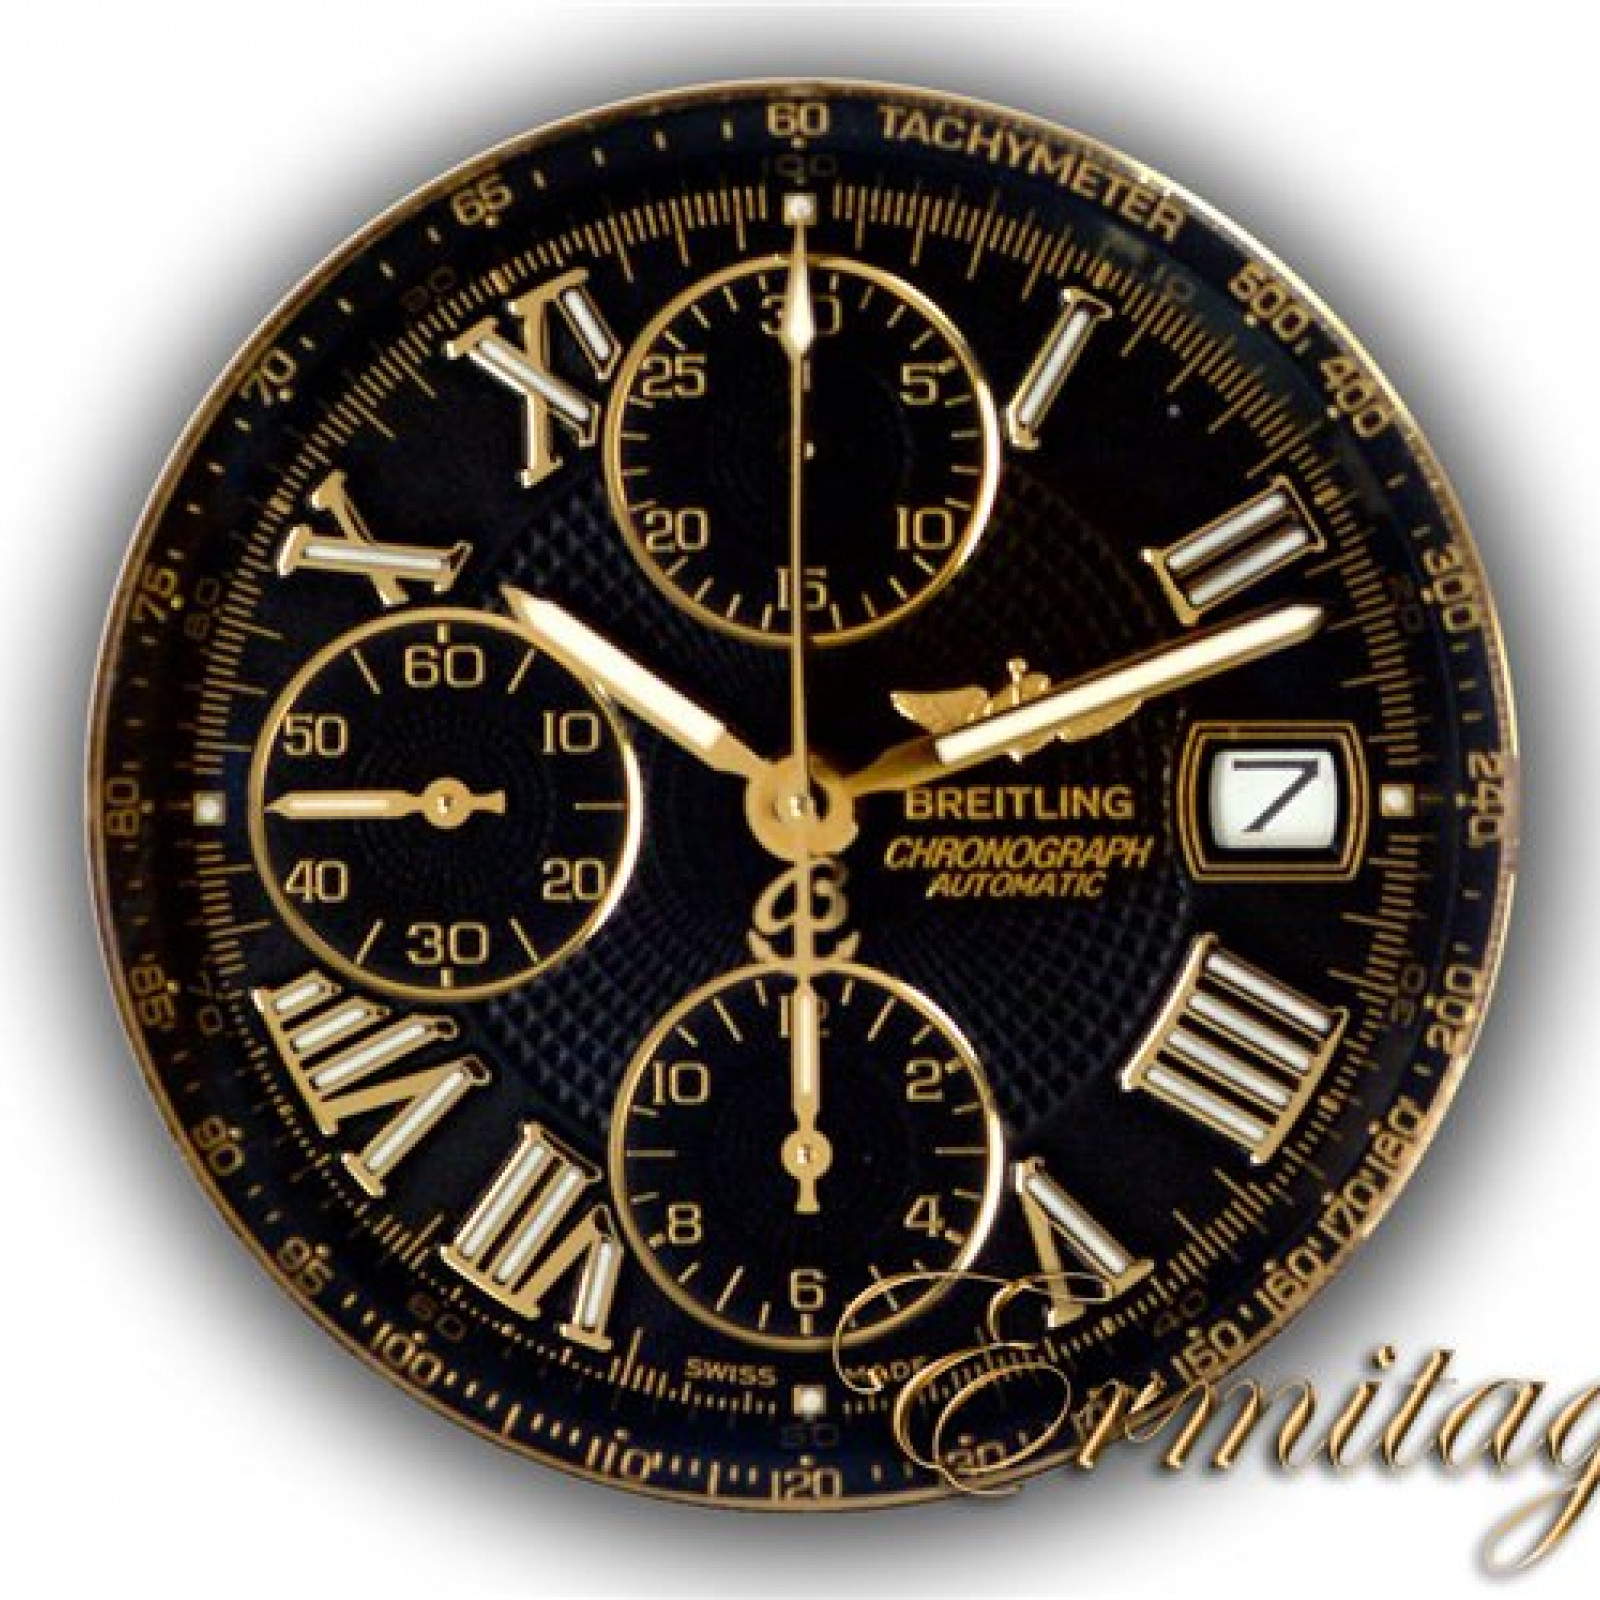 Breitling Windrider Crosswind Chronograph K13055 Gold